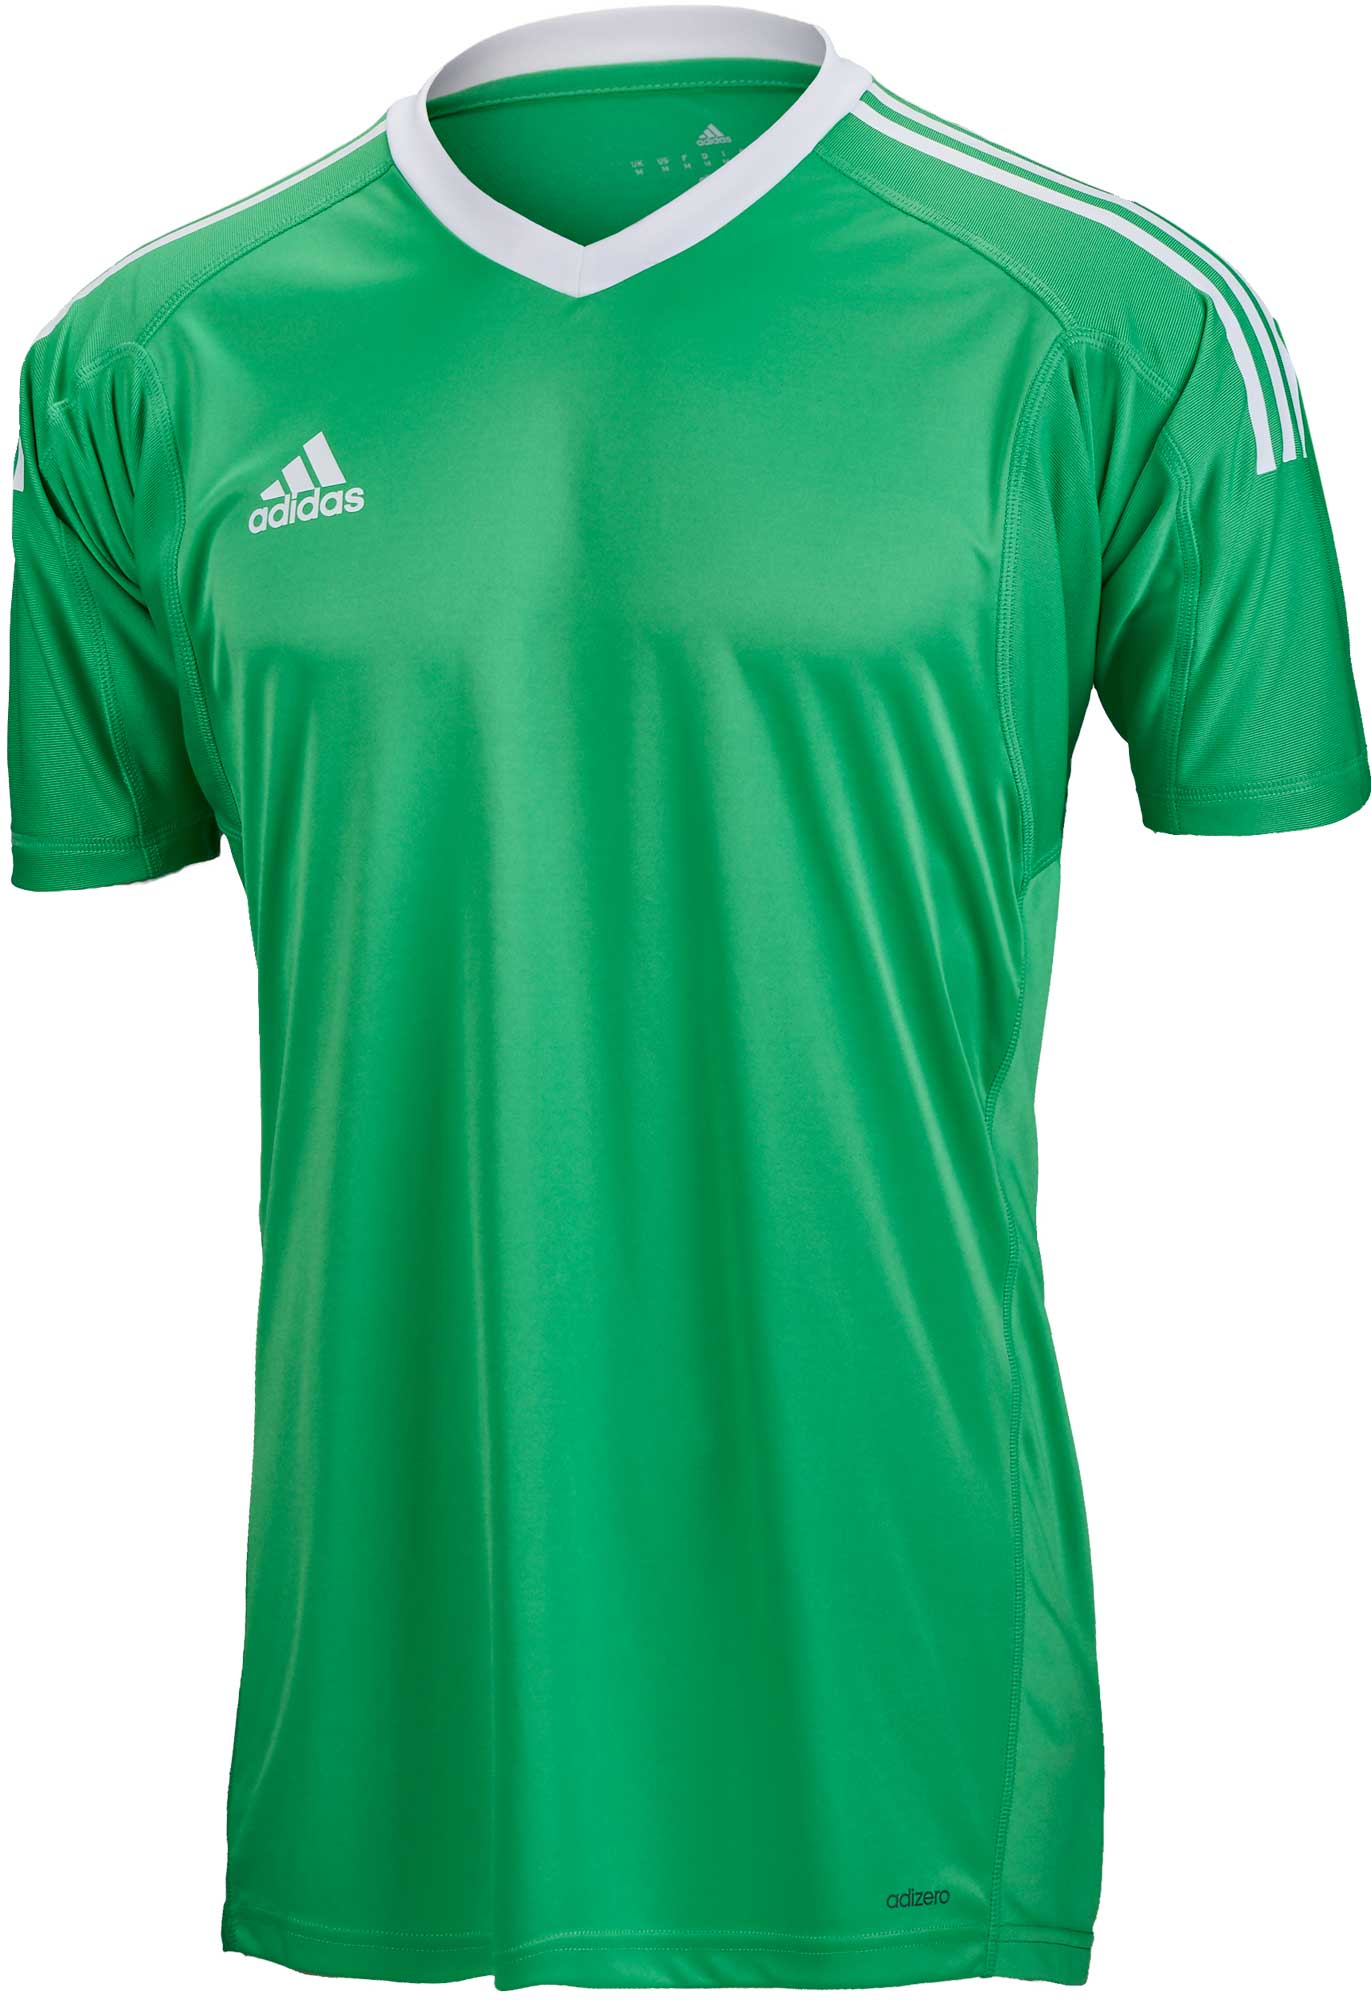 adidas Revigo 17 S/S Goalkeeper Jersey - Energy Green & White